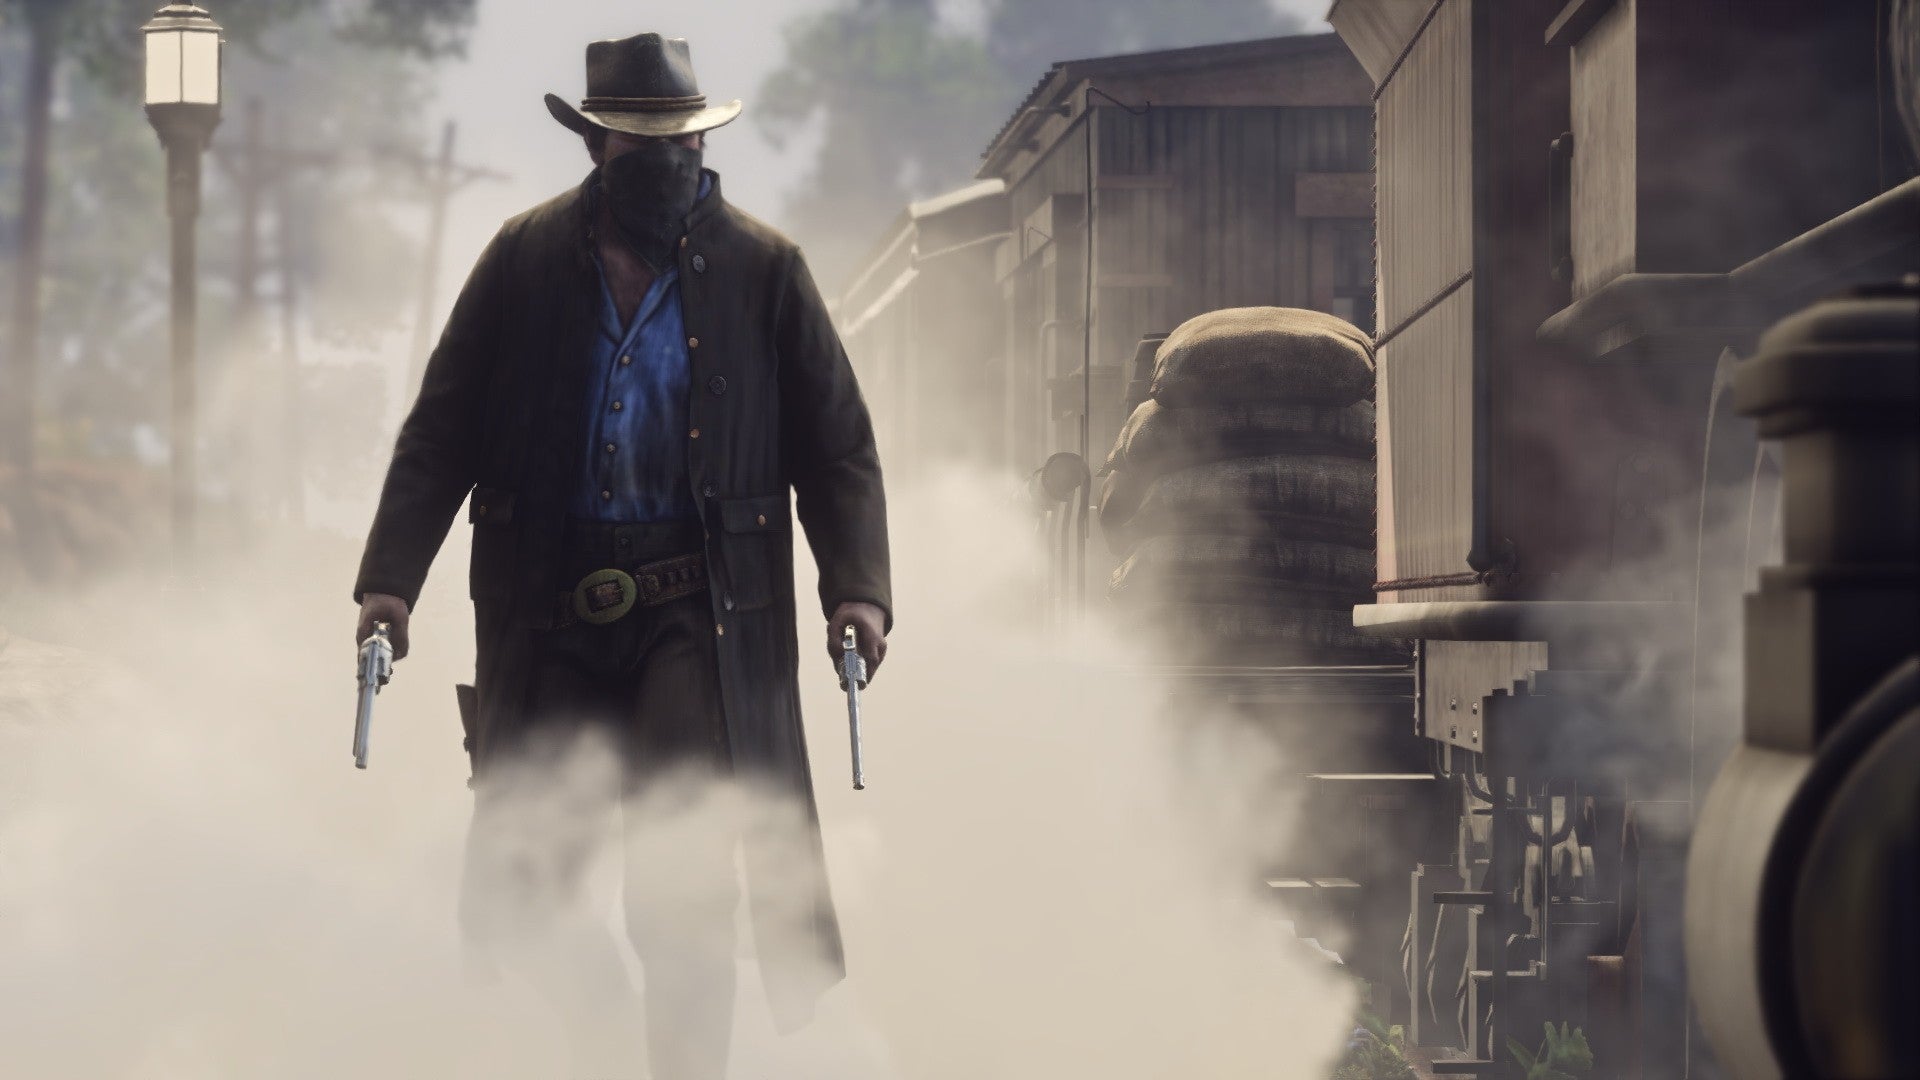 Image from Red Dead Redemption 2 showing Arthur Morgan wearing a bandana walking through smoke on a street.  He wields double-barreled revolvers.